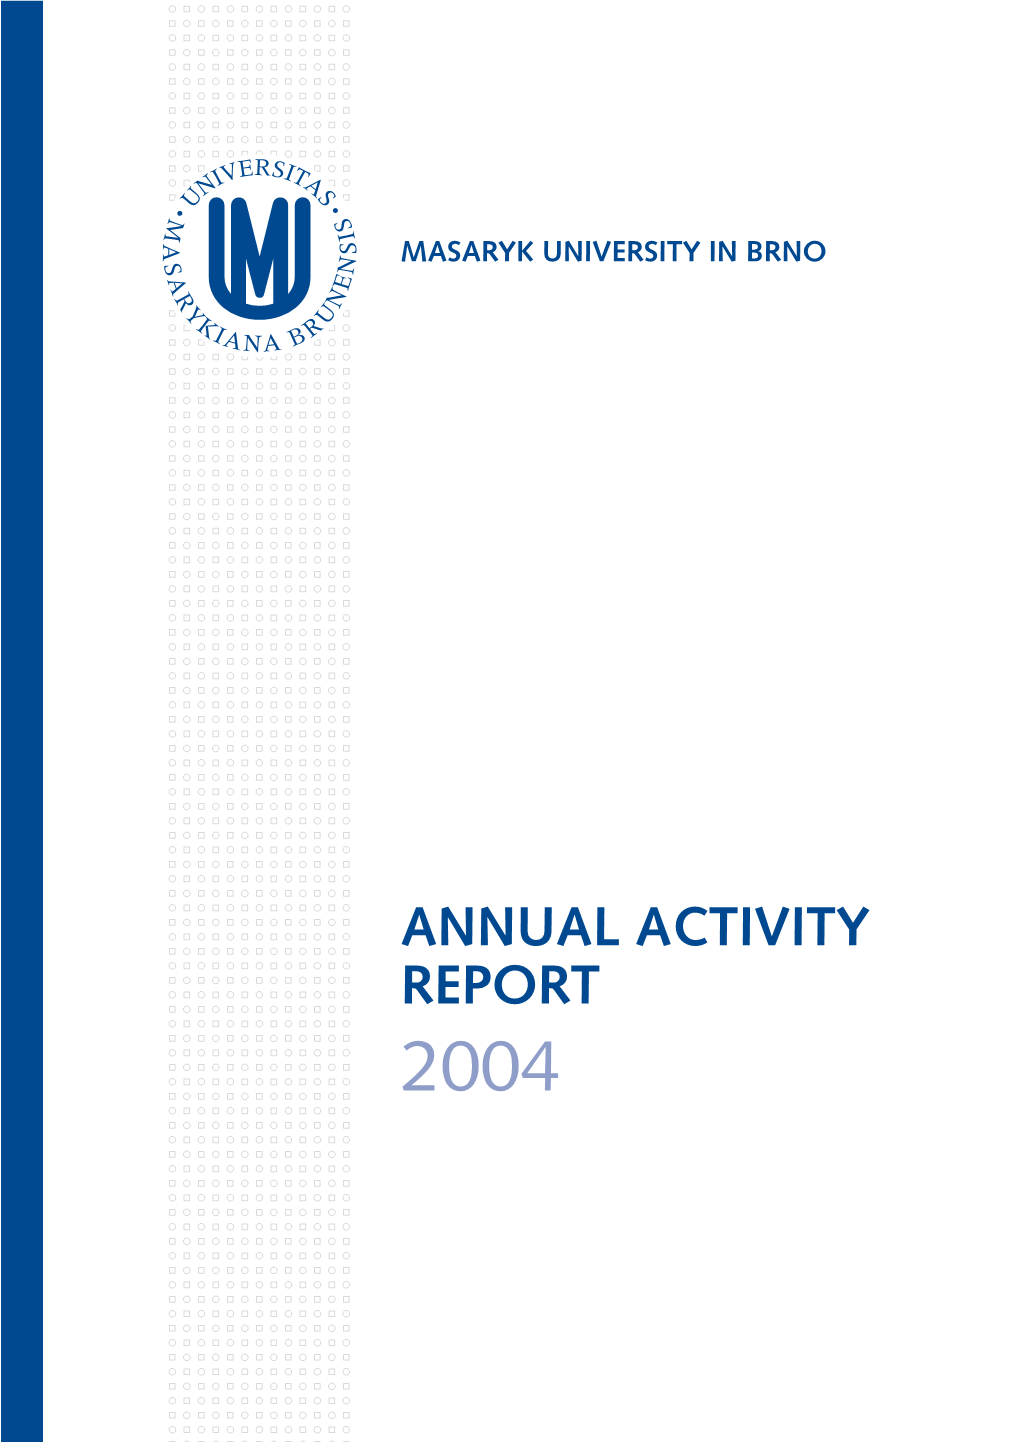 Annual Activity Report 2004